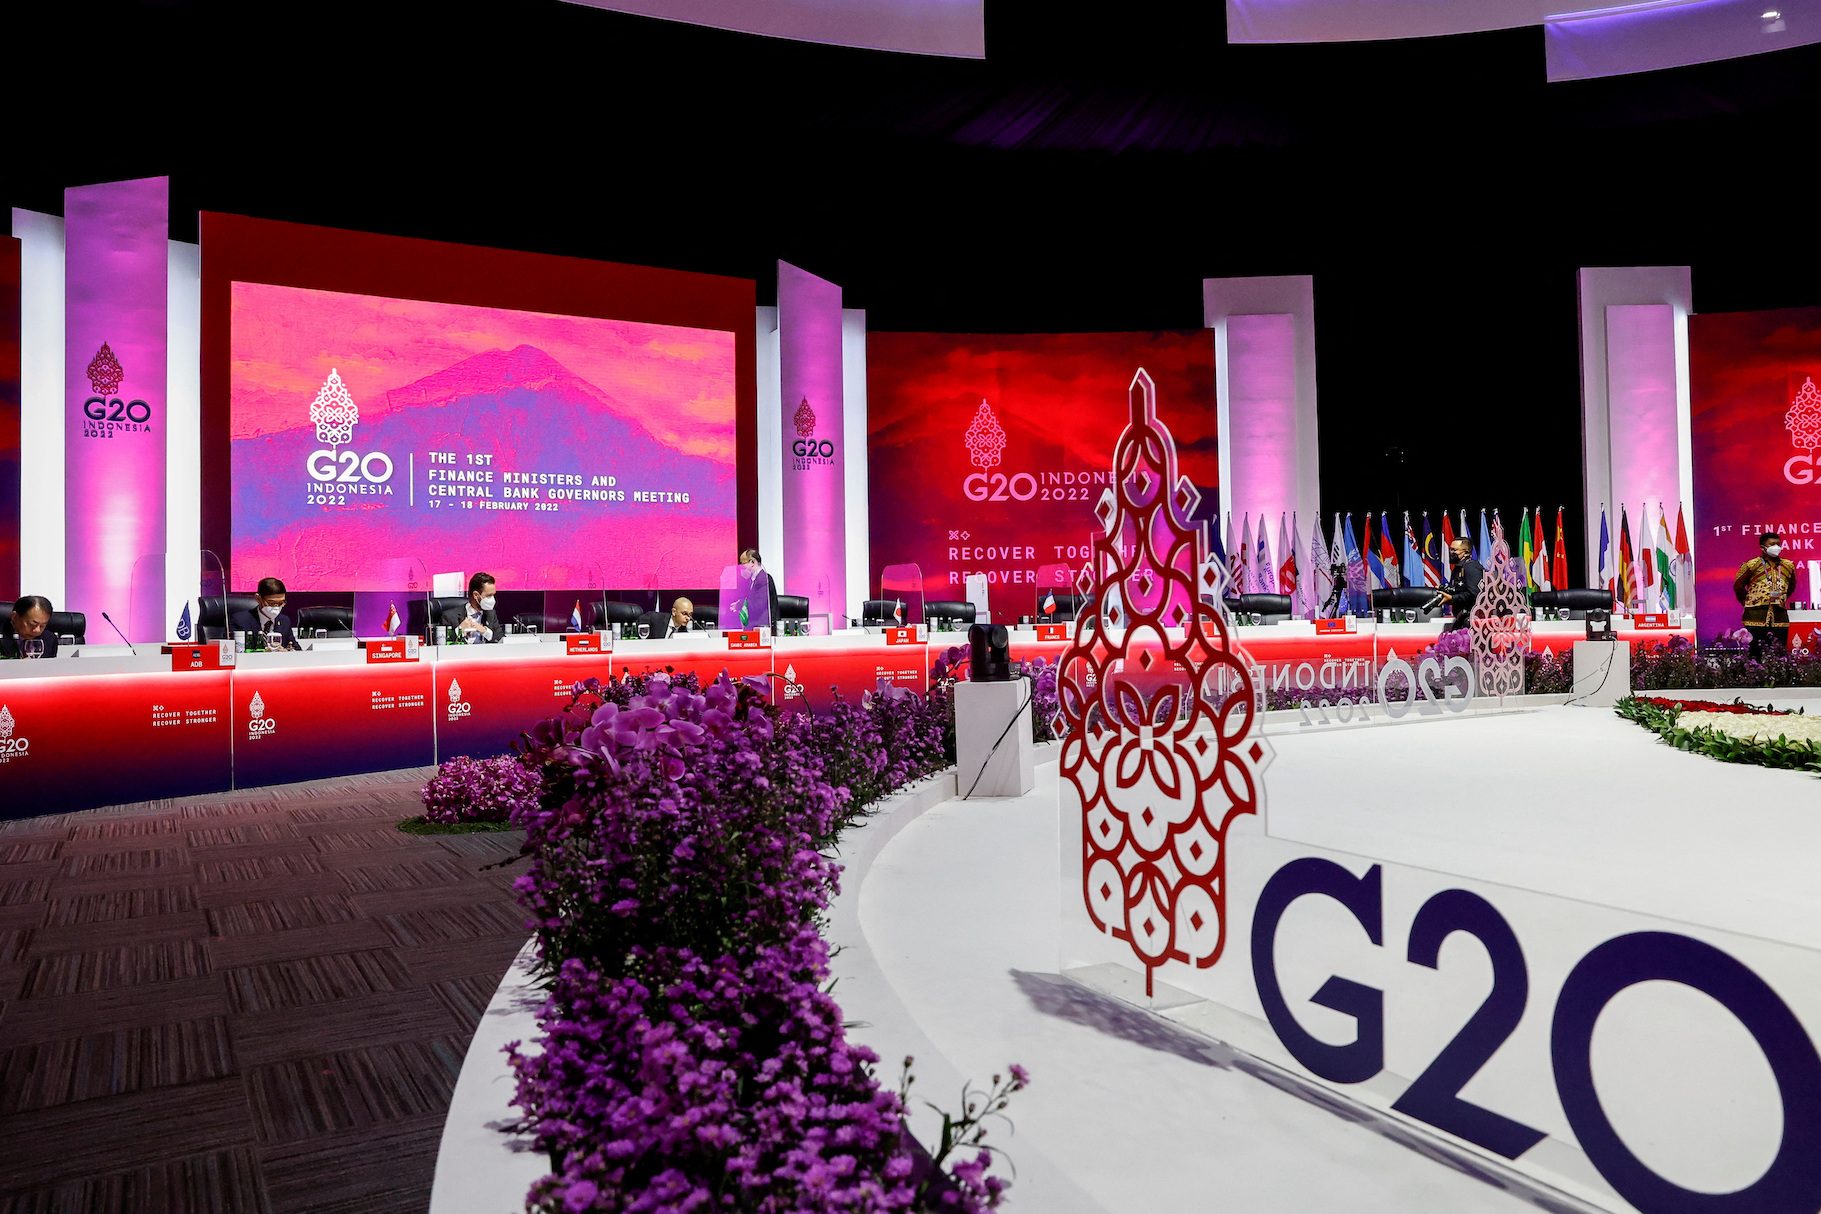 Xi, Putin to attend G20 summit in Indonesia, Jokowi says – Bloomberg News